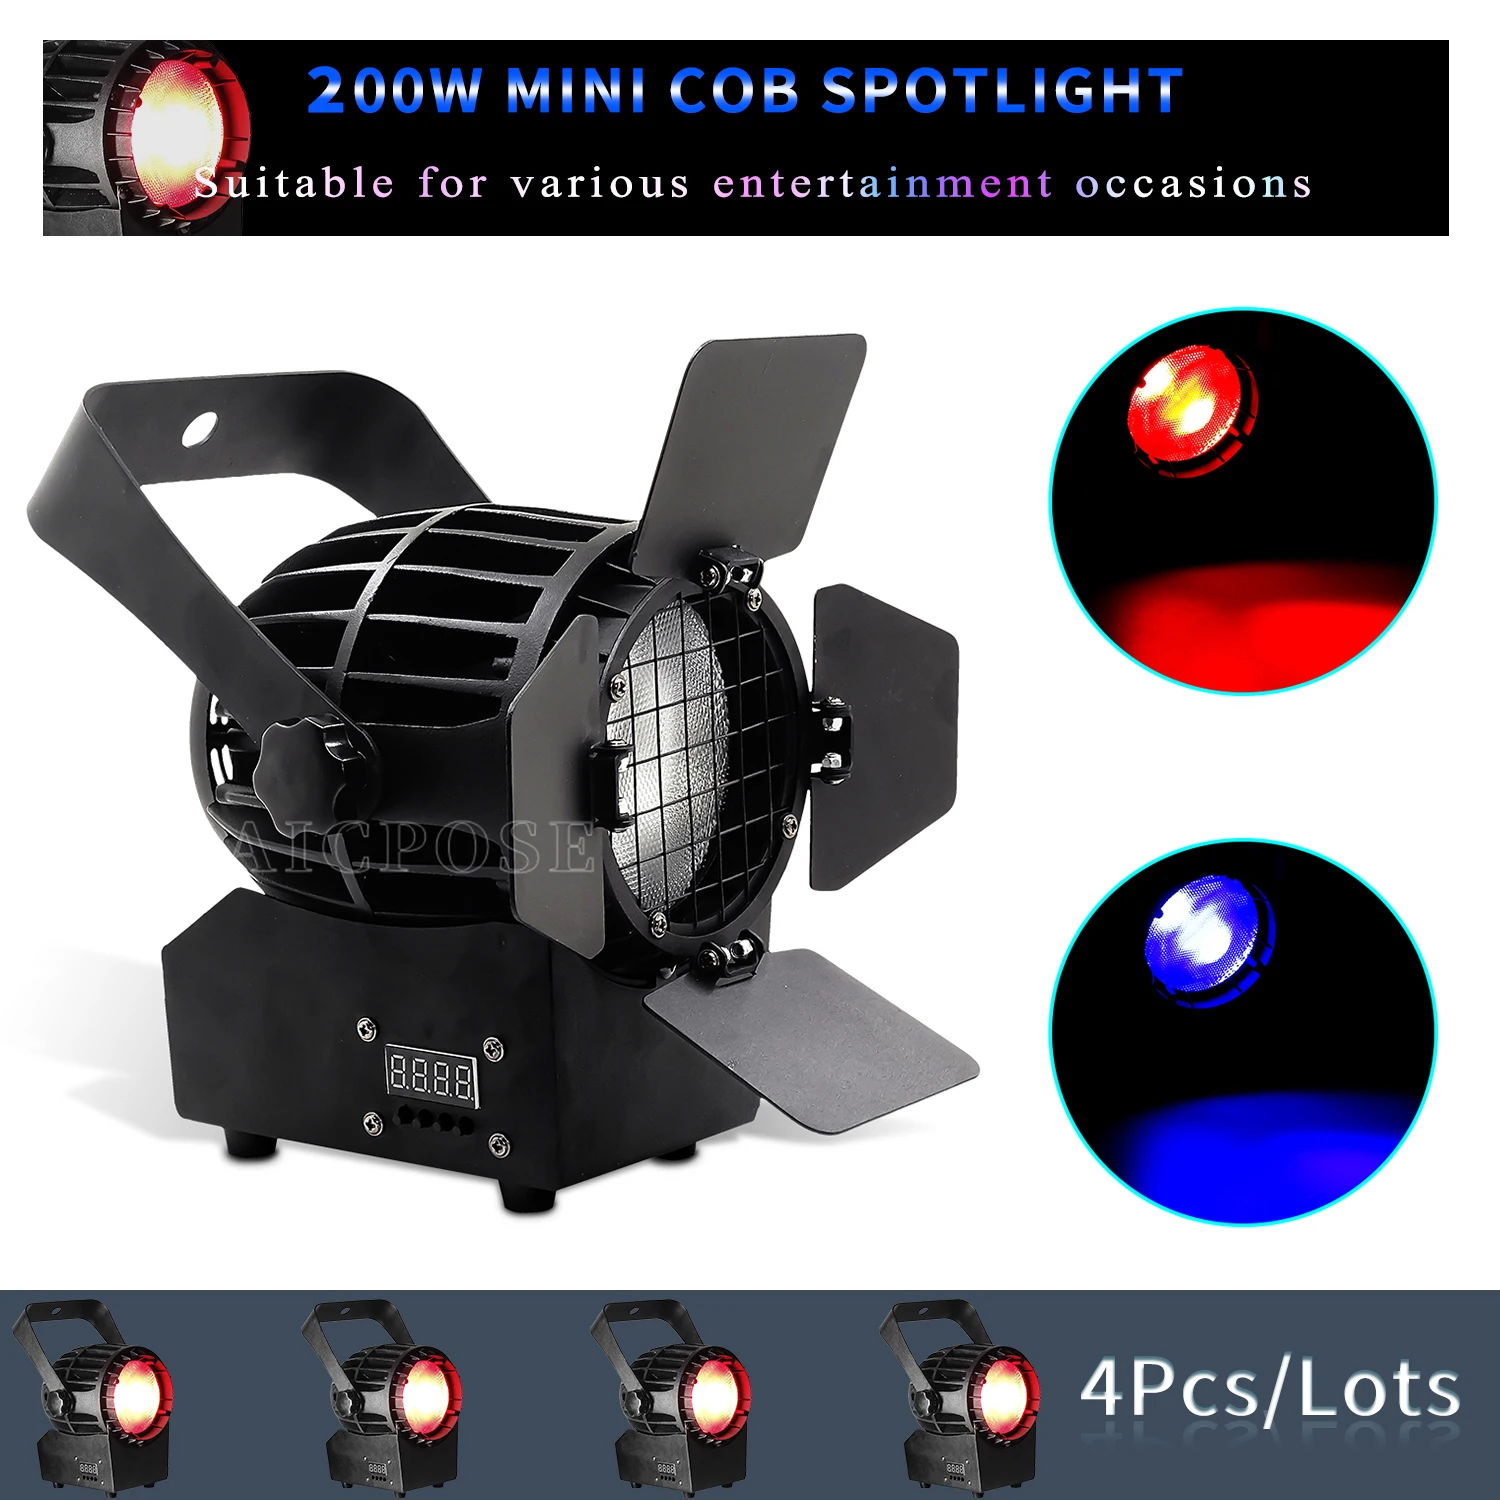 

4Pcs/Lots 200W Mini COB RGBW 4 in 1 LED Stage Spotlight White/Warm White with Barn Door DMX Control DJ Disco Equipment